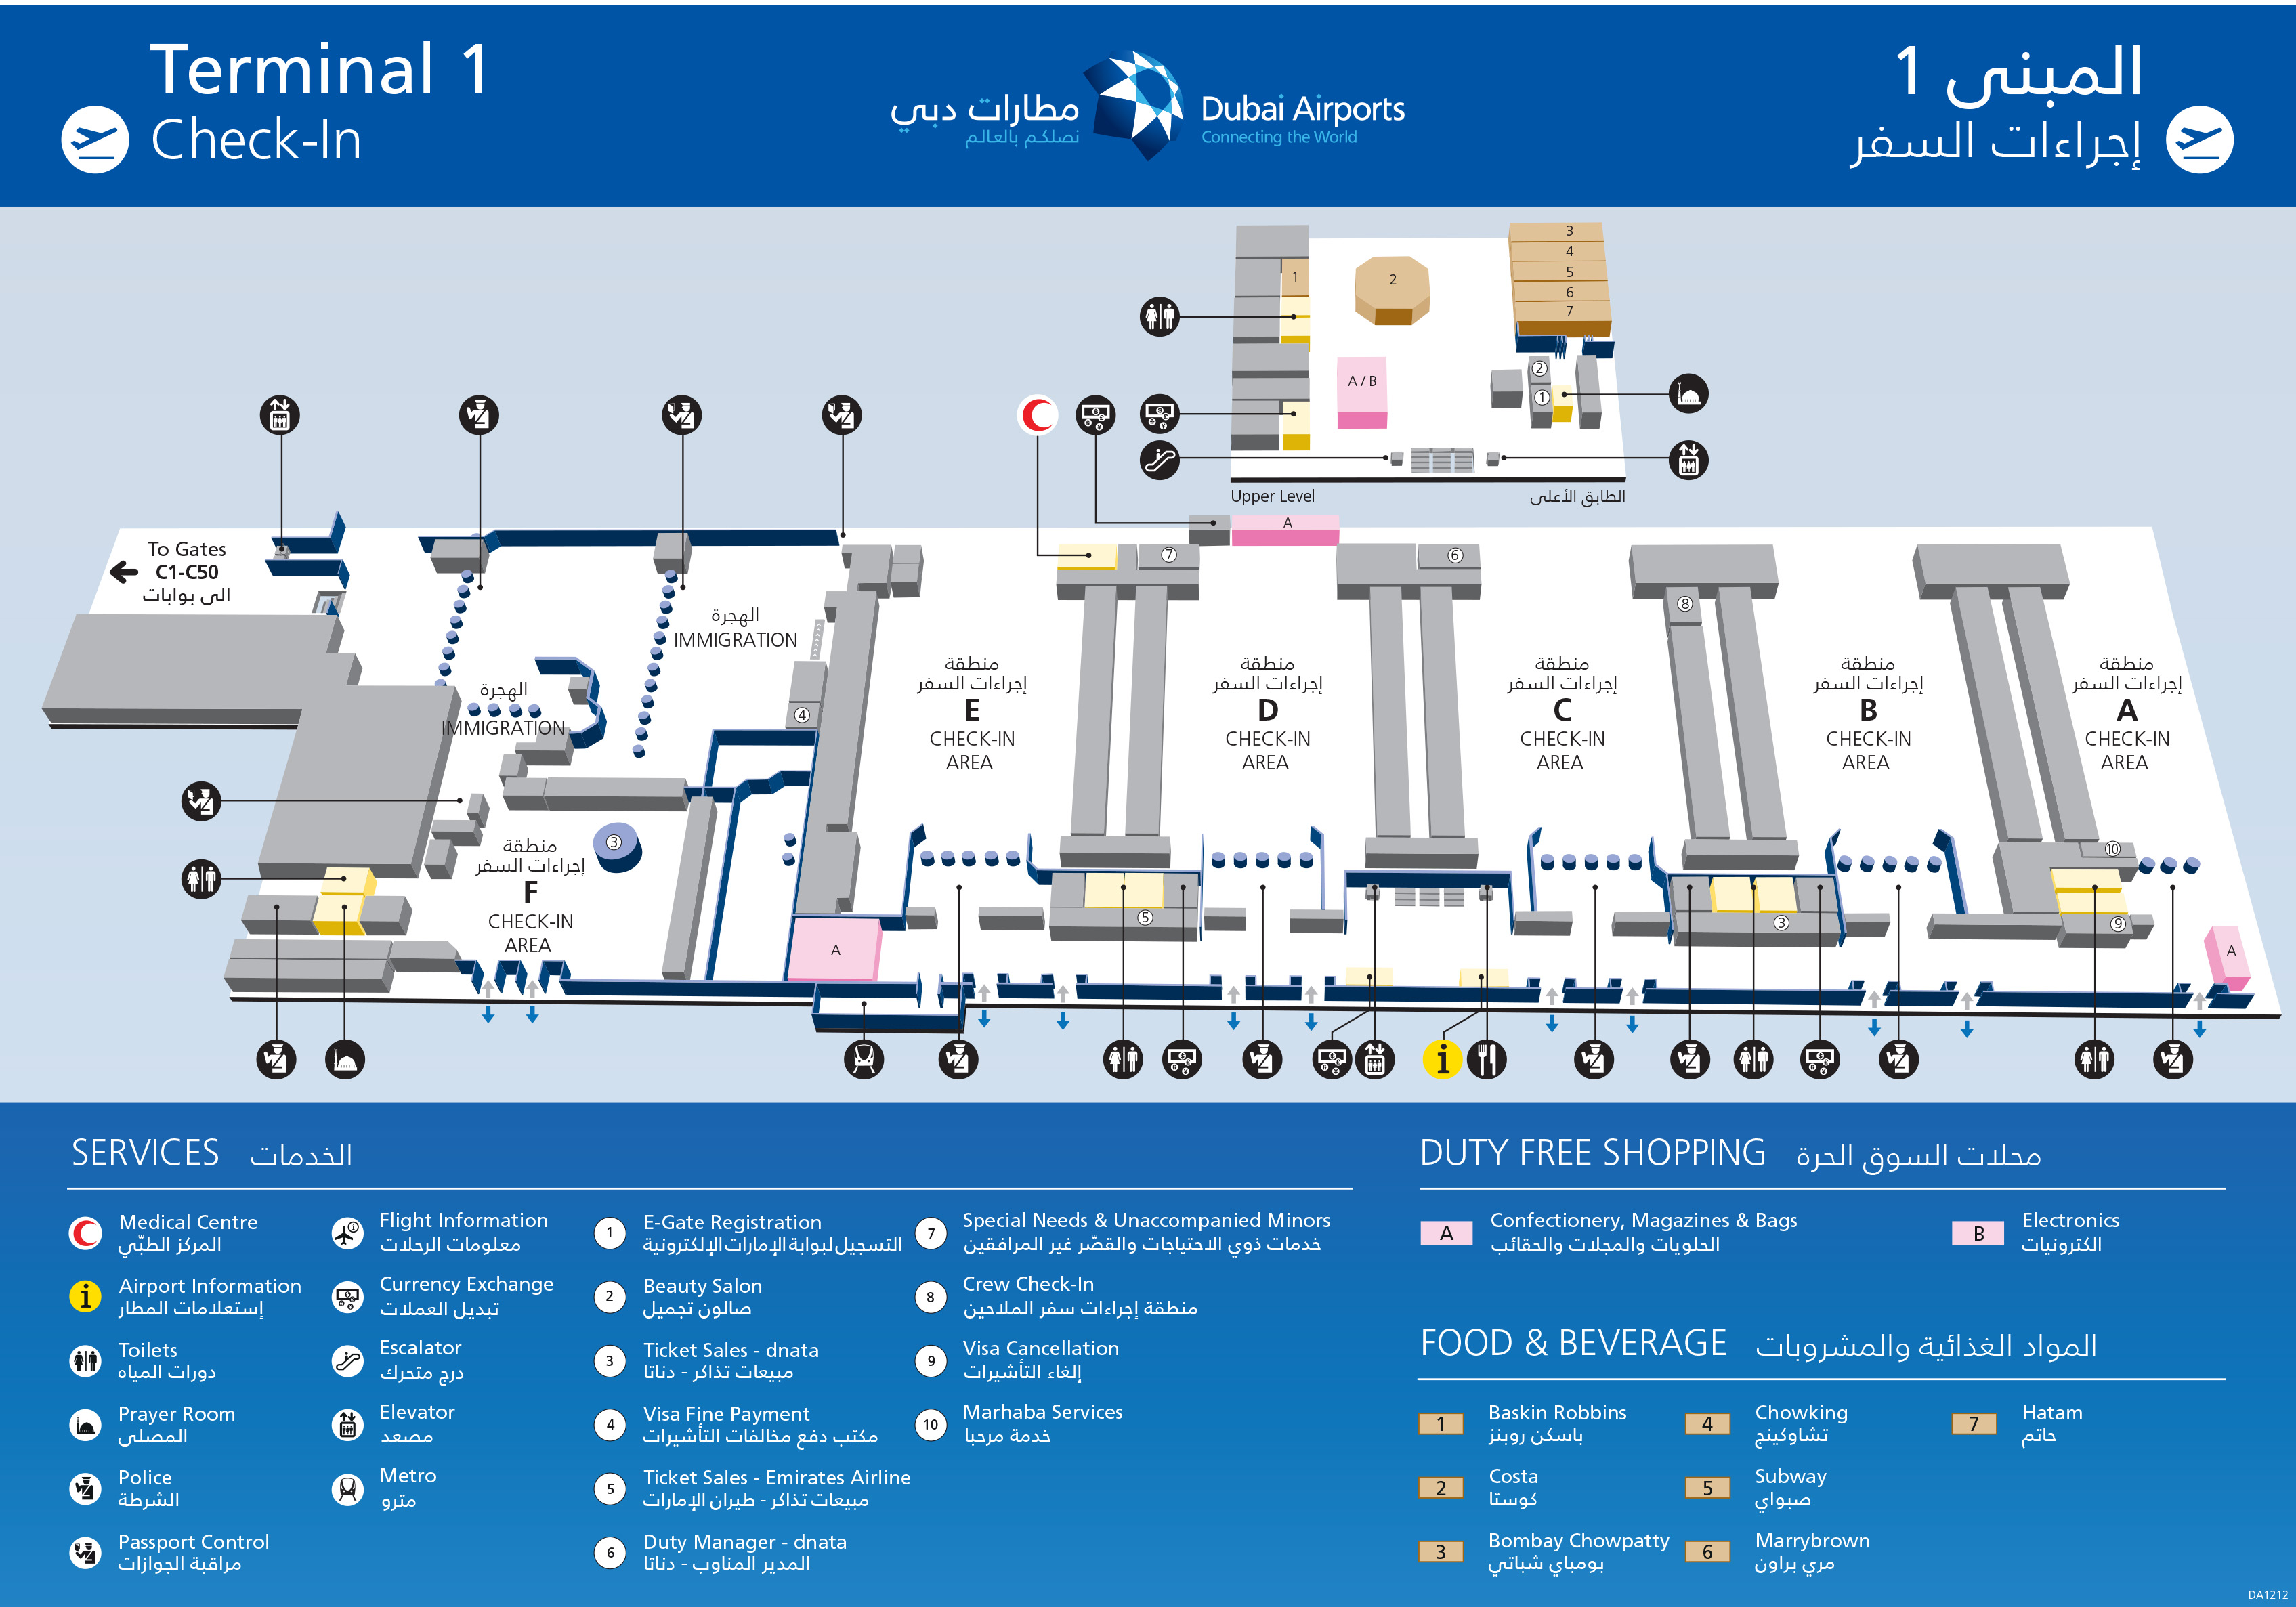 Airport terminal 1. Схема аэропорта Дубай терминал 1. Схема аэропорта Дубай Международный 3 терминал. План аэропорта Дубай терминал 1. Карта аэропорта Дубай терминал 1.